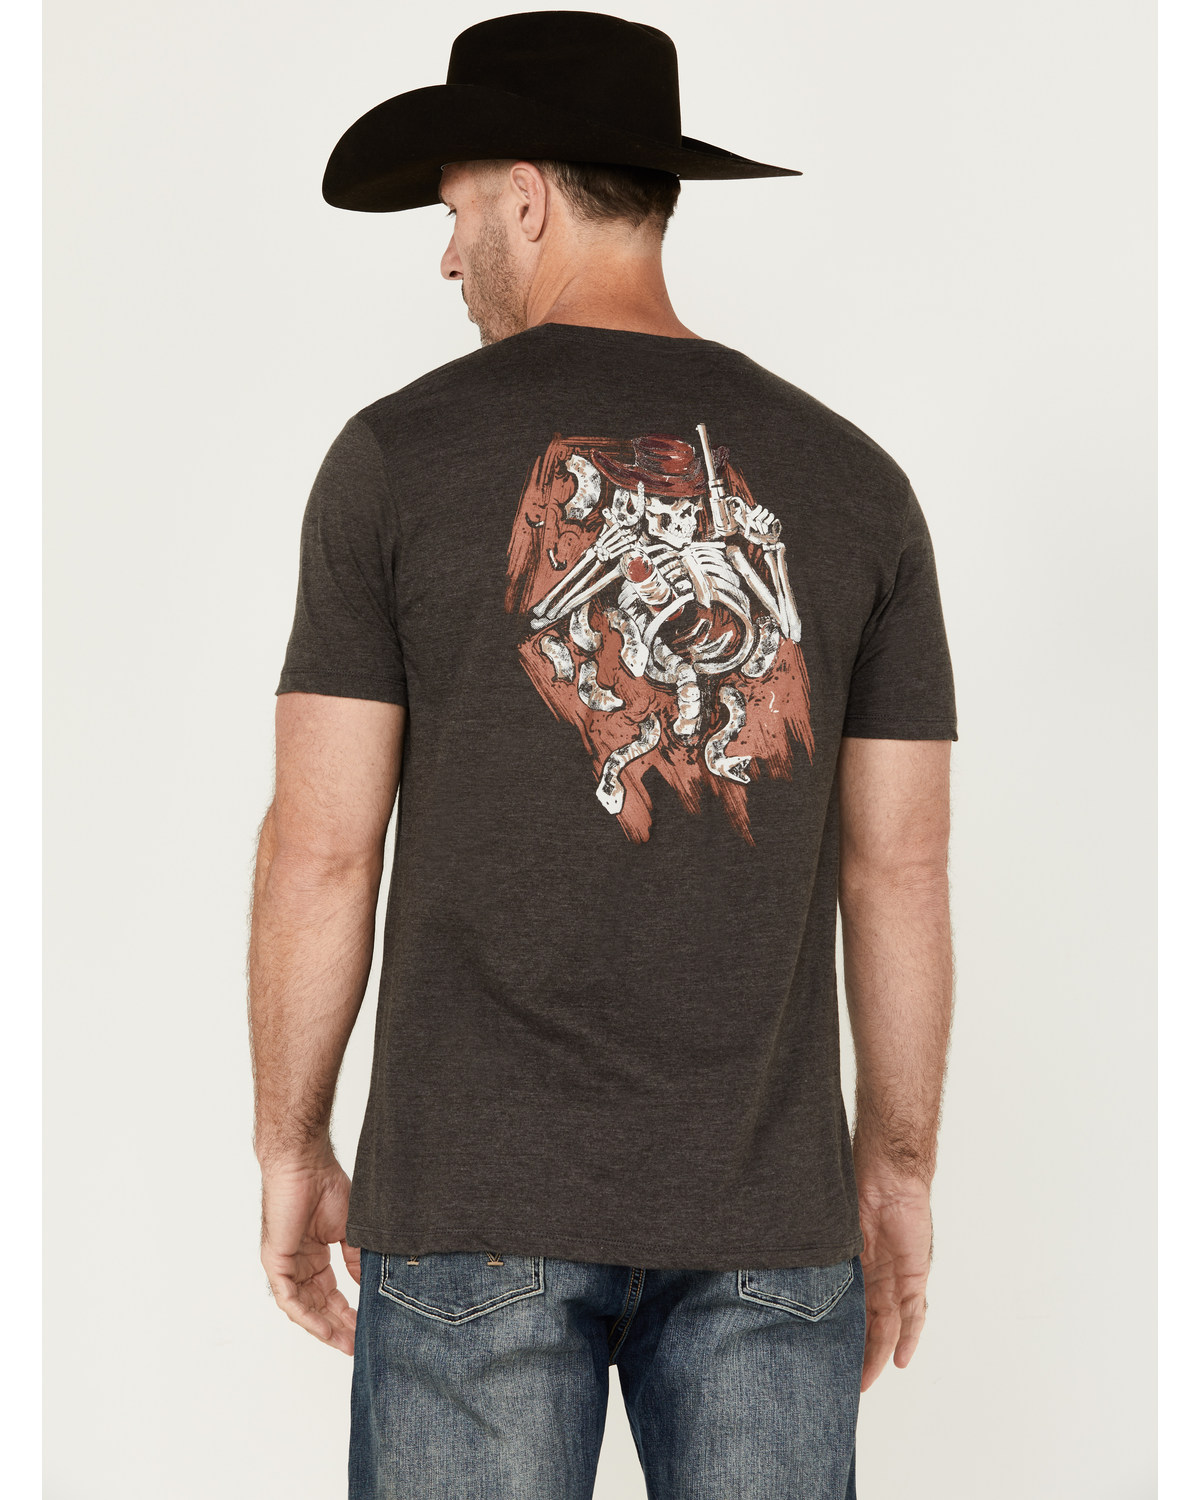 Cody James Men's Troubled Skeleton Short Sleeve Graphic T-Shirt